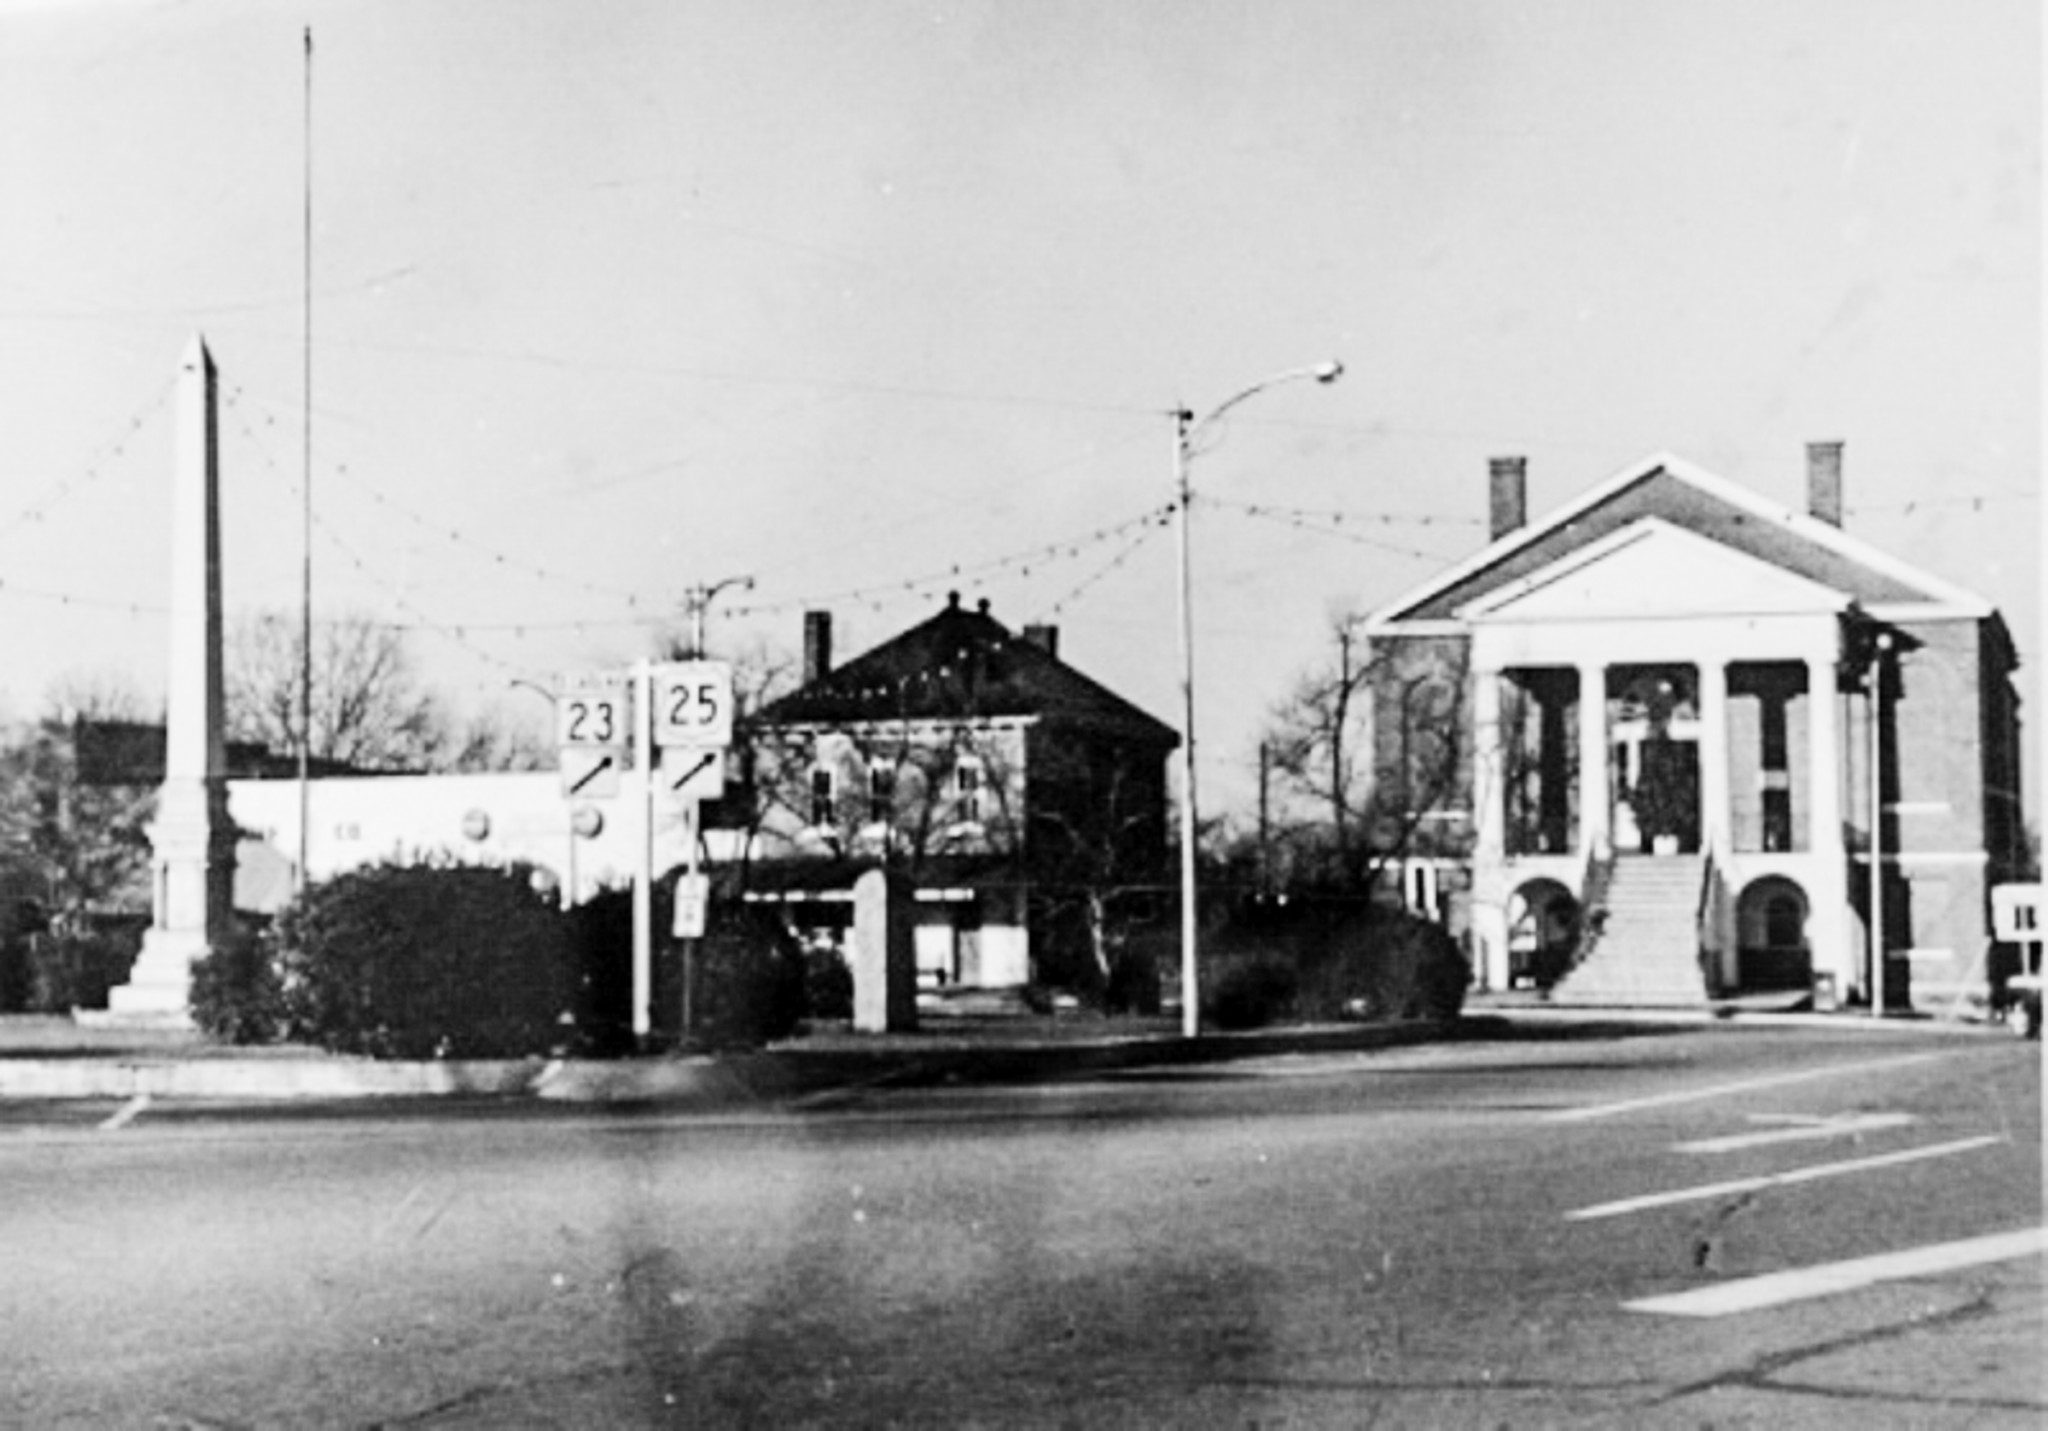 1950s image of the Edgefield Square - Neistler